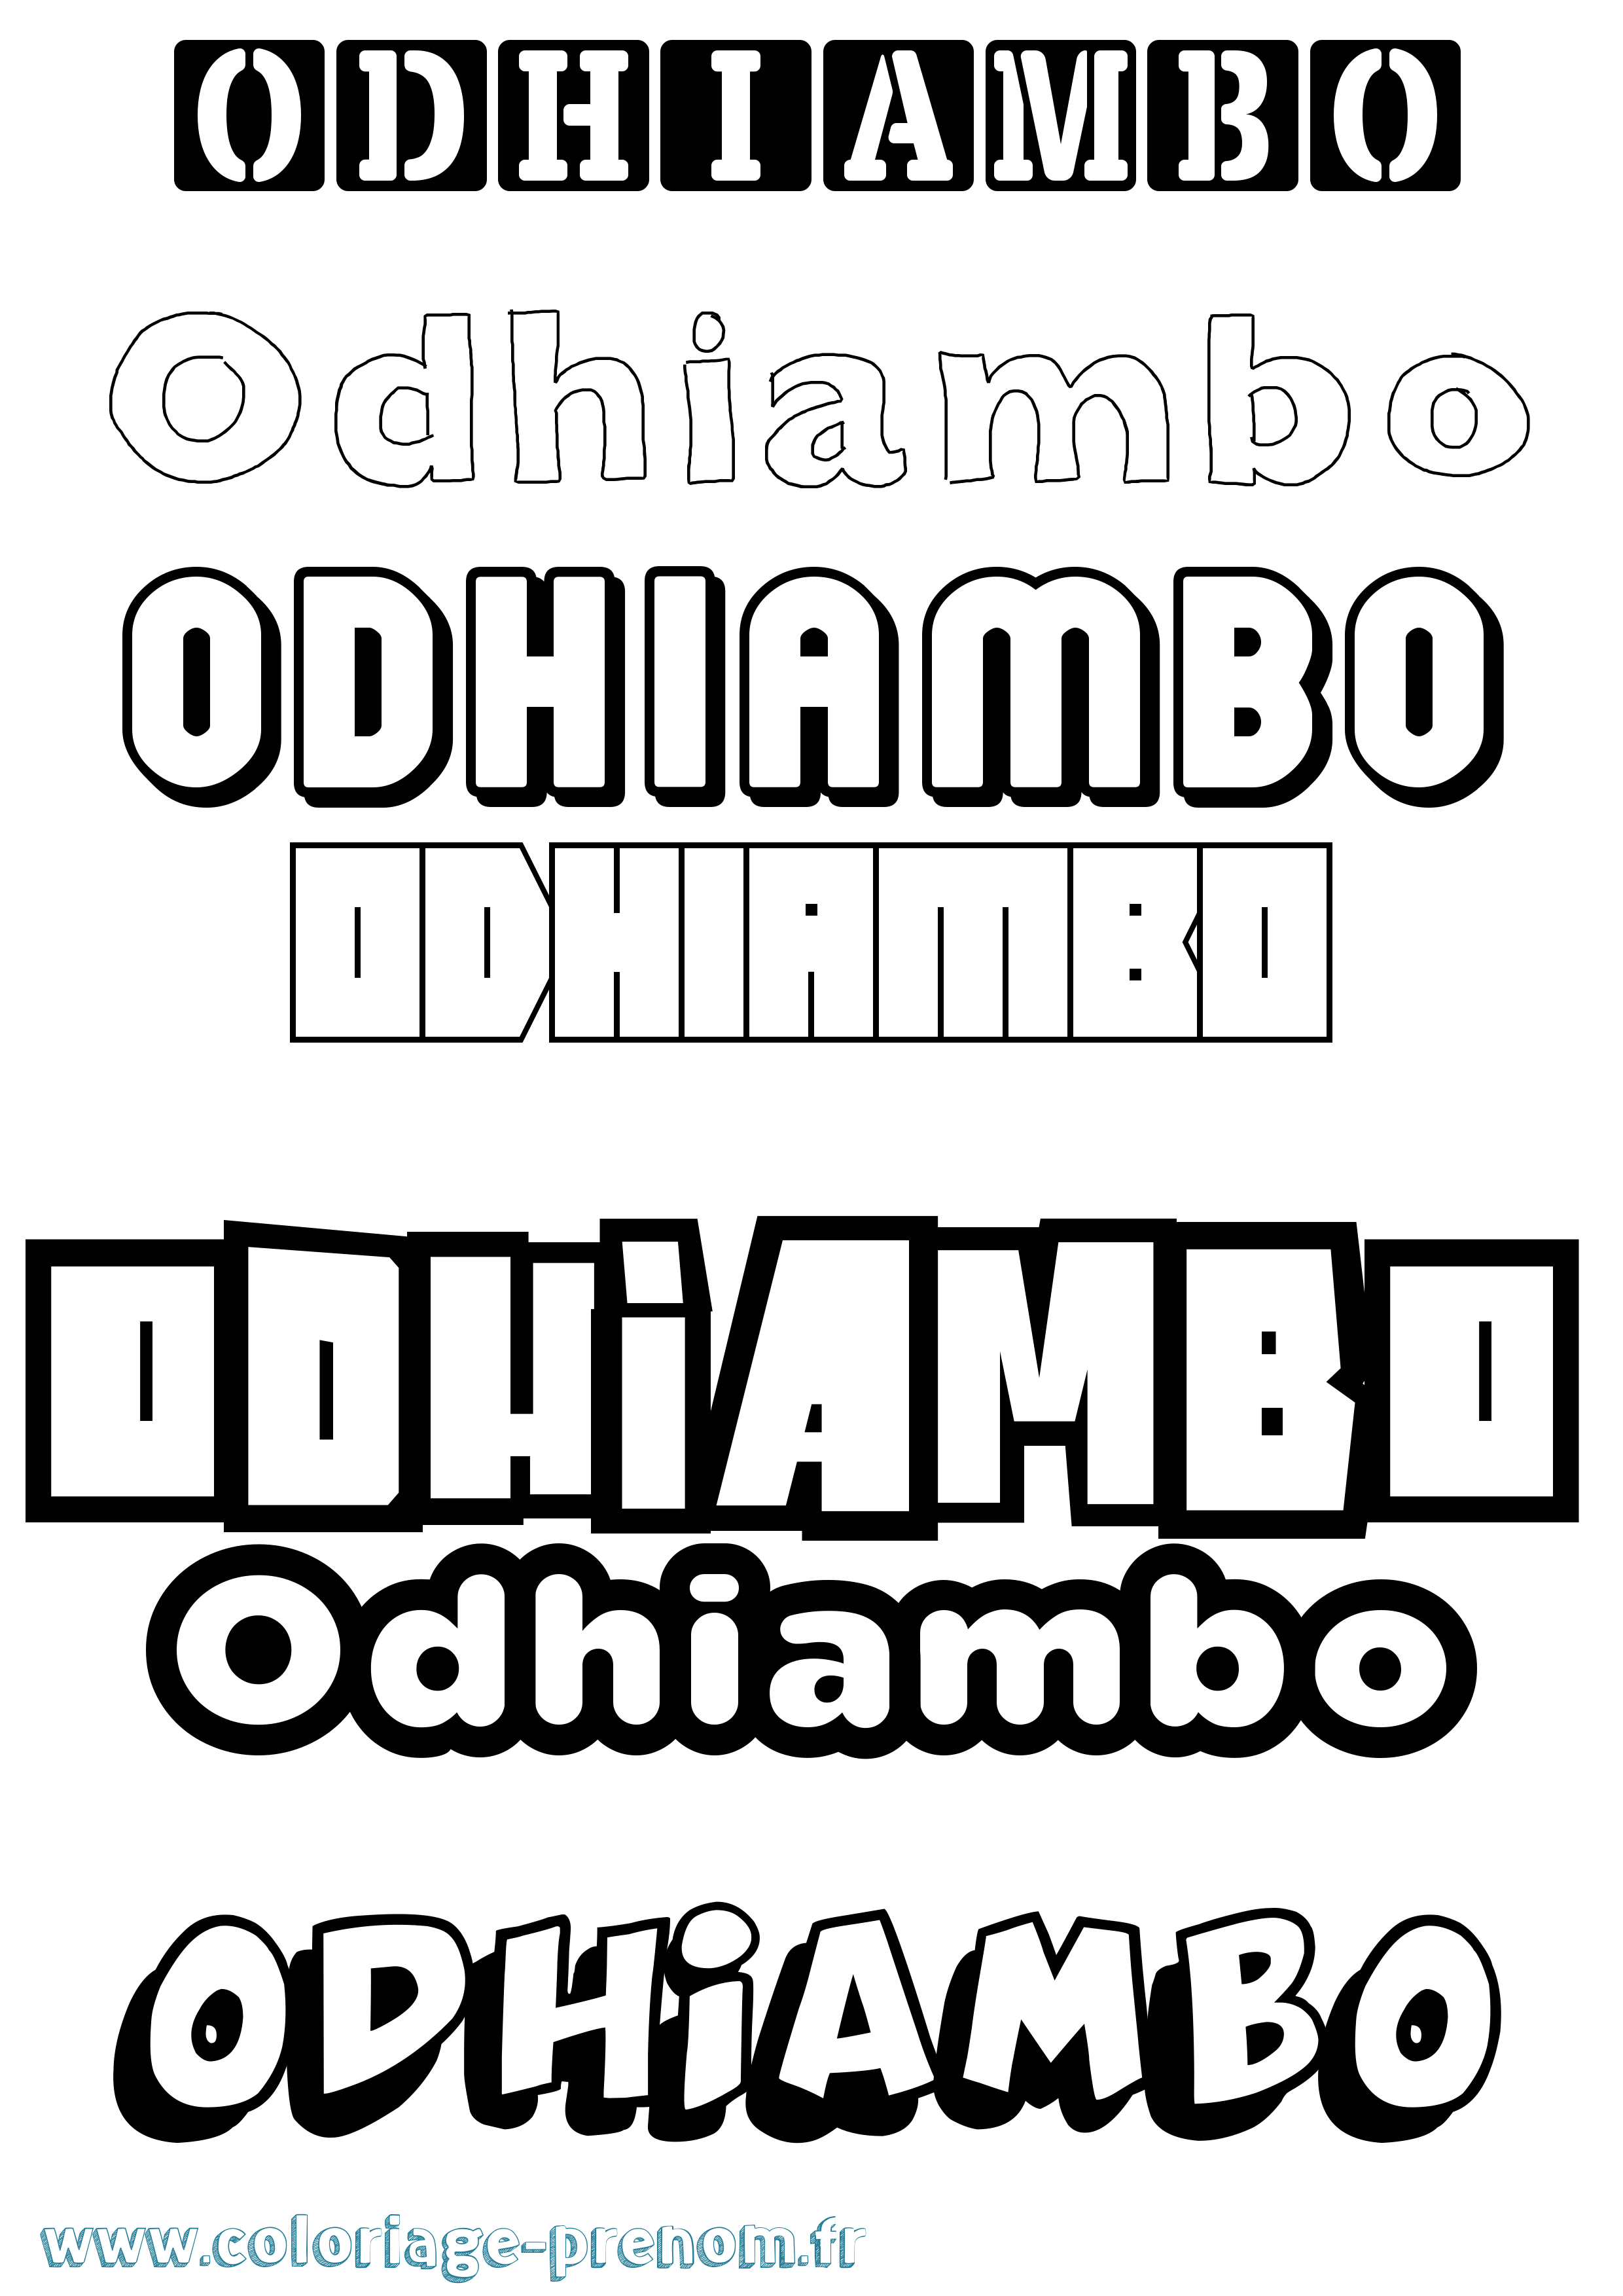 Coloriage prénom Odhiambo Simple